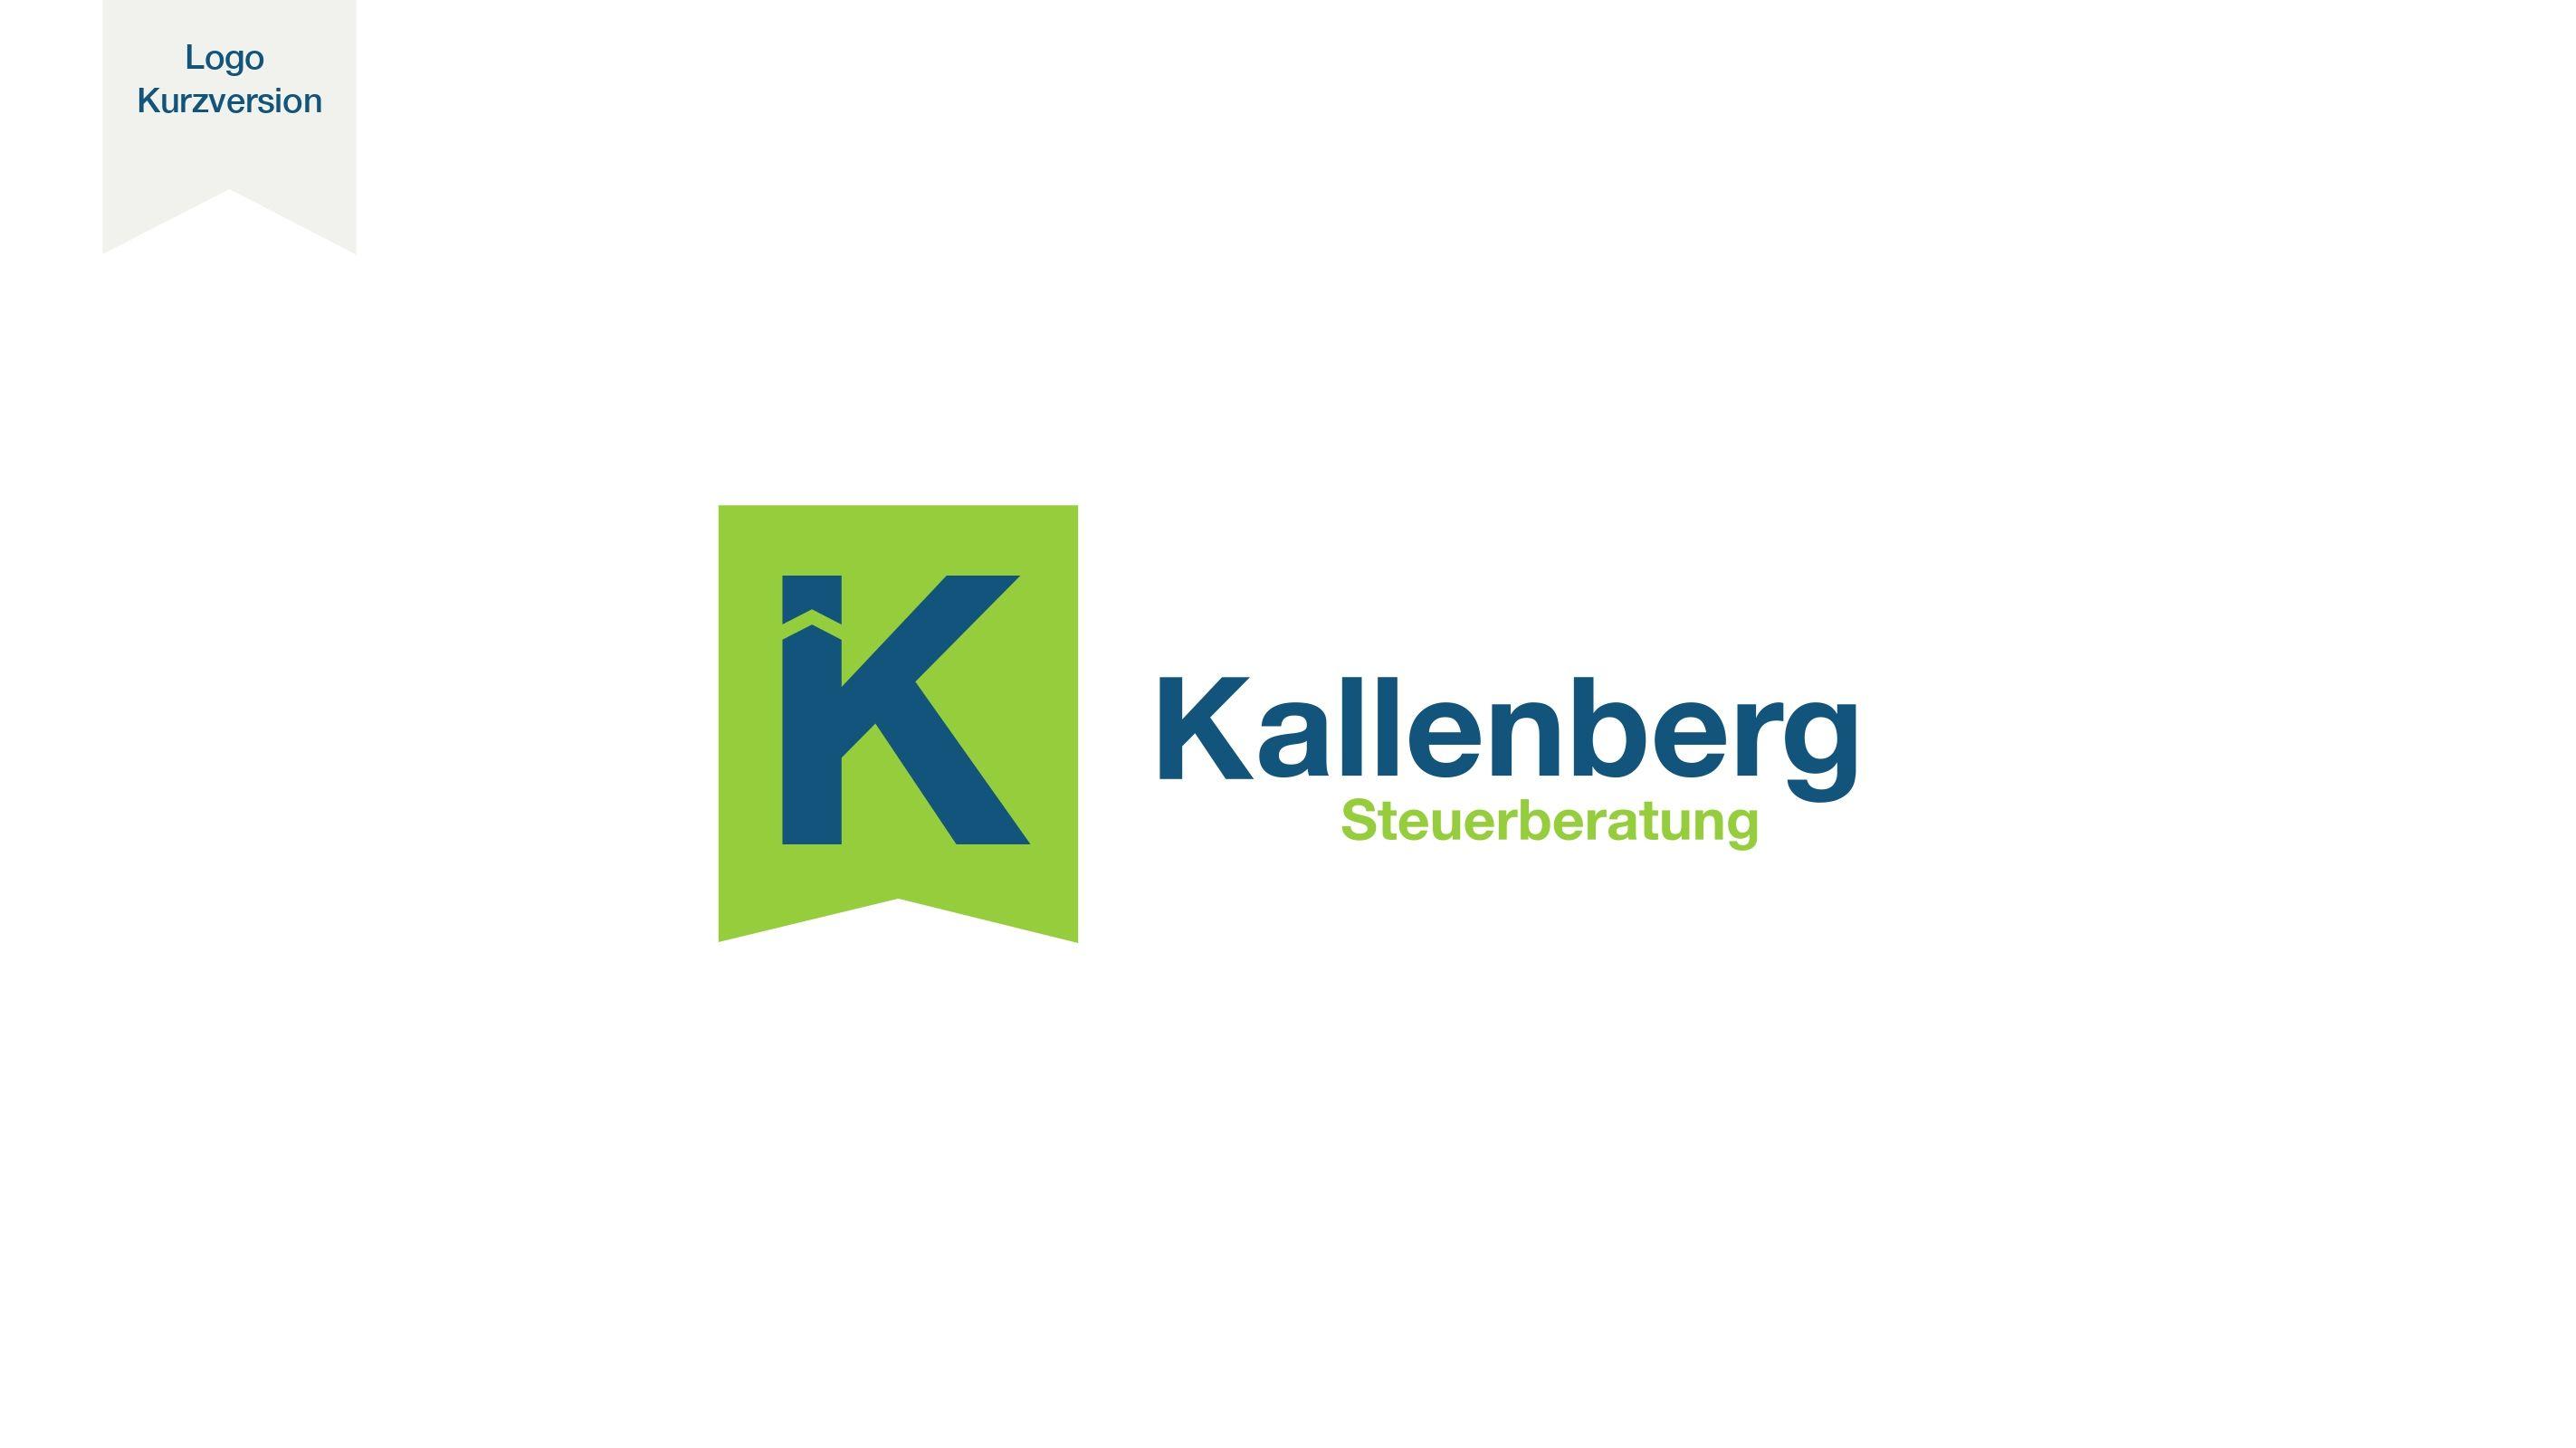 Kallenberg Steuerberatung - Visual Identity_page-0004.jpg